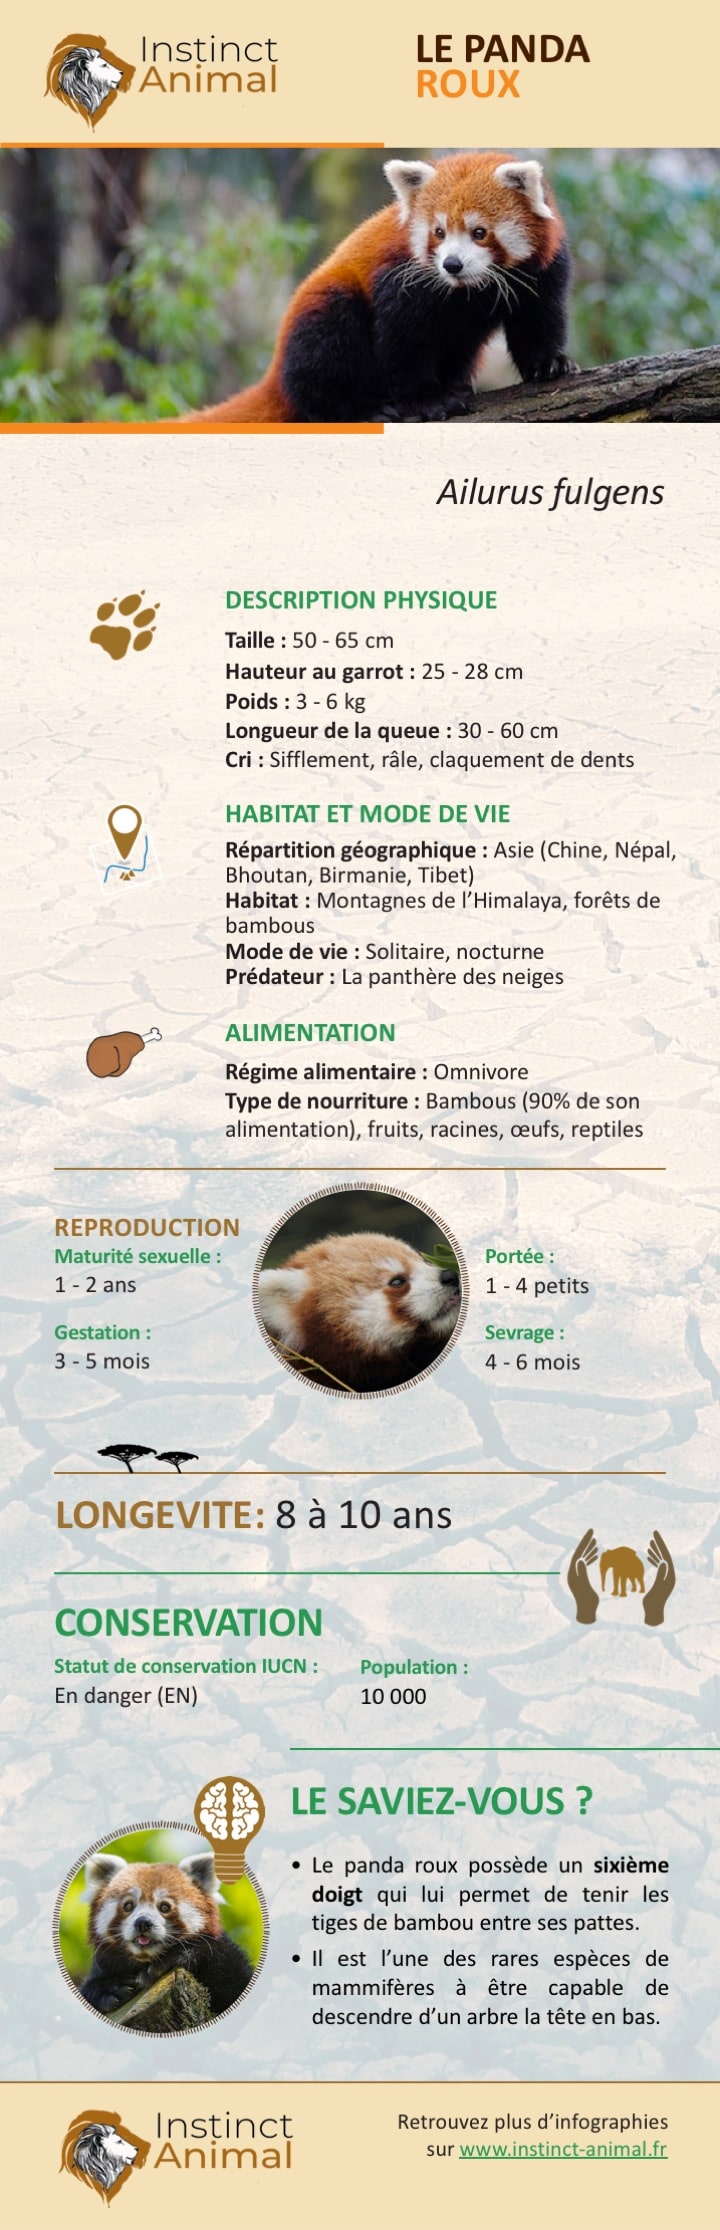 https://www.instinct-animal.fr/panda-roux-infographie-2/